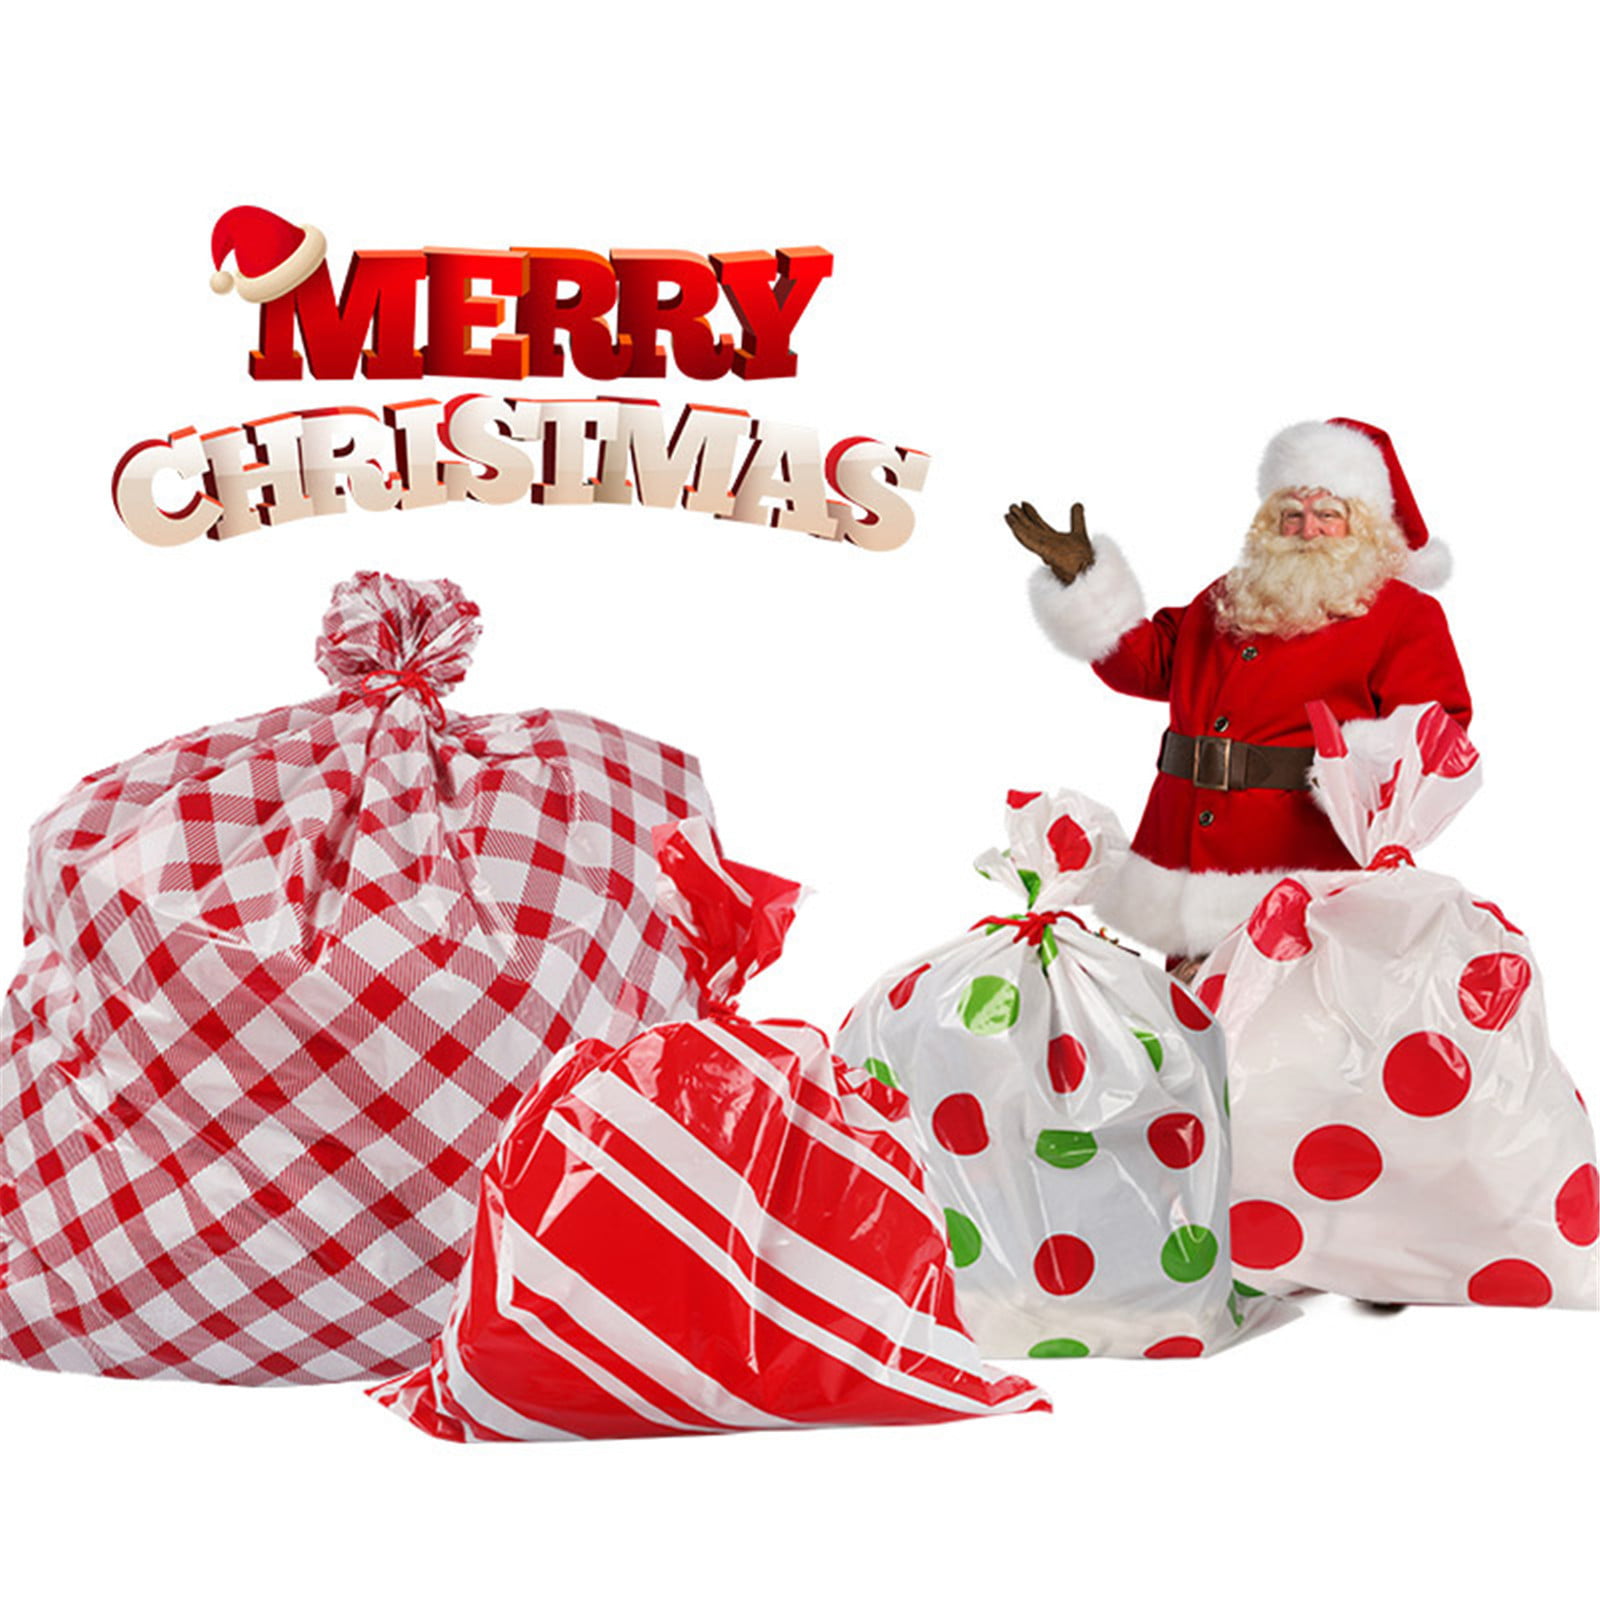 New -2018 4 x Jumbo Géant Santa Sacks Stocking Noël Extra Large Sac Cadeau